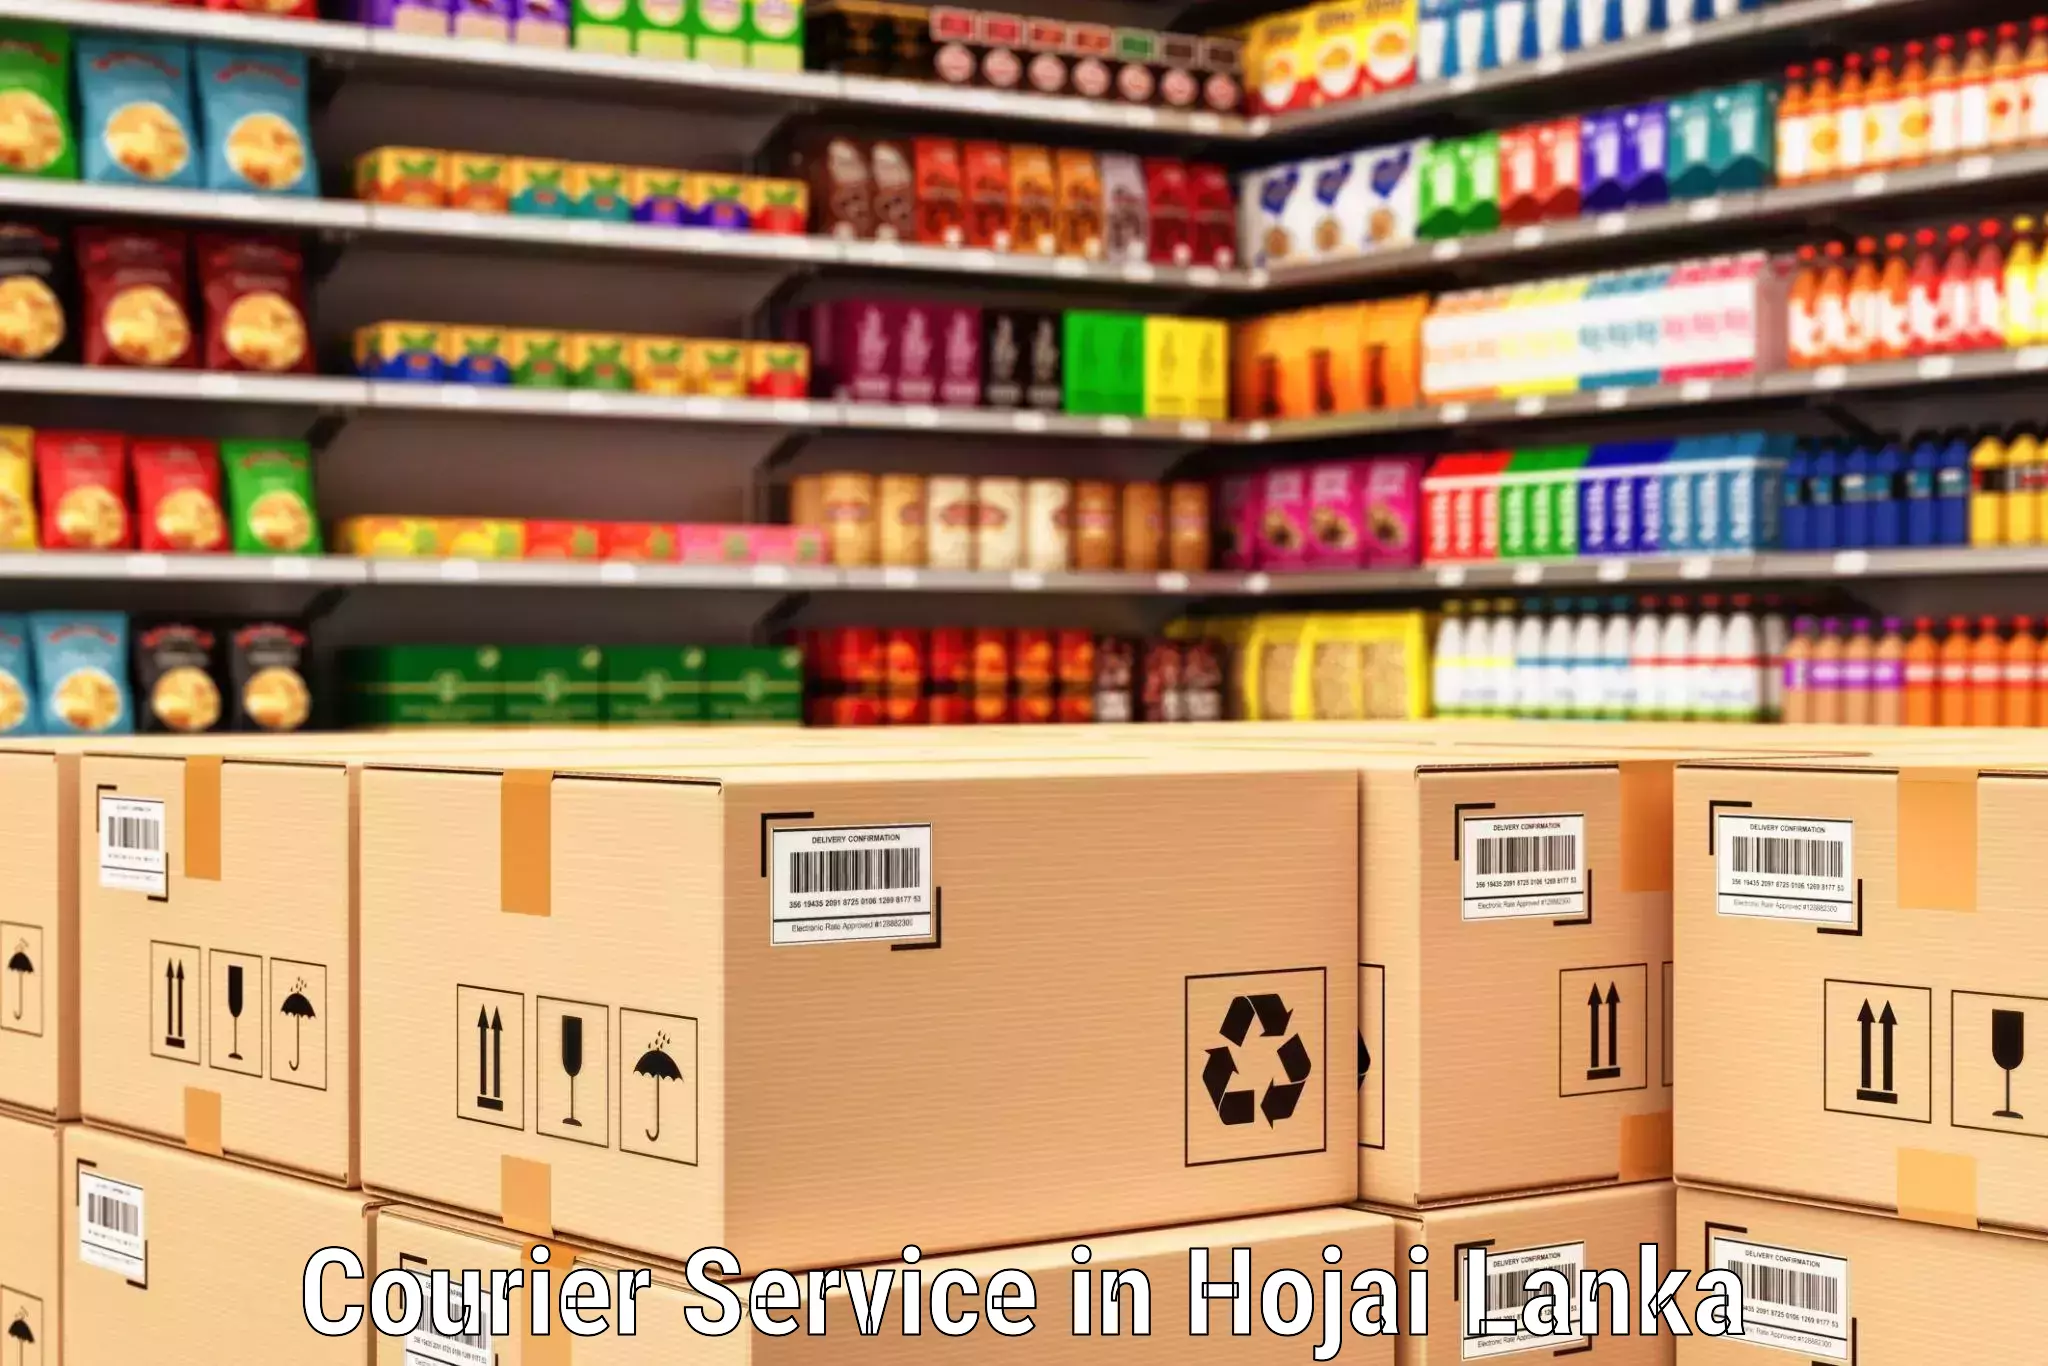 Specialized shipment handling in Hojai Lanka